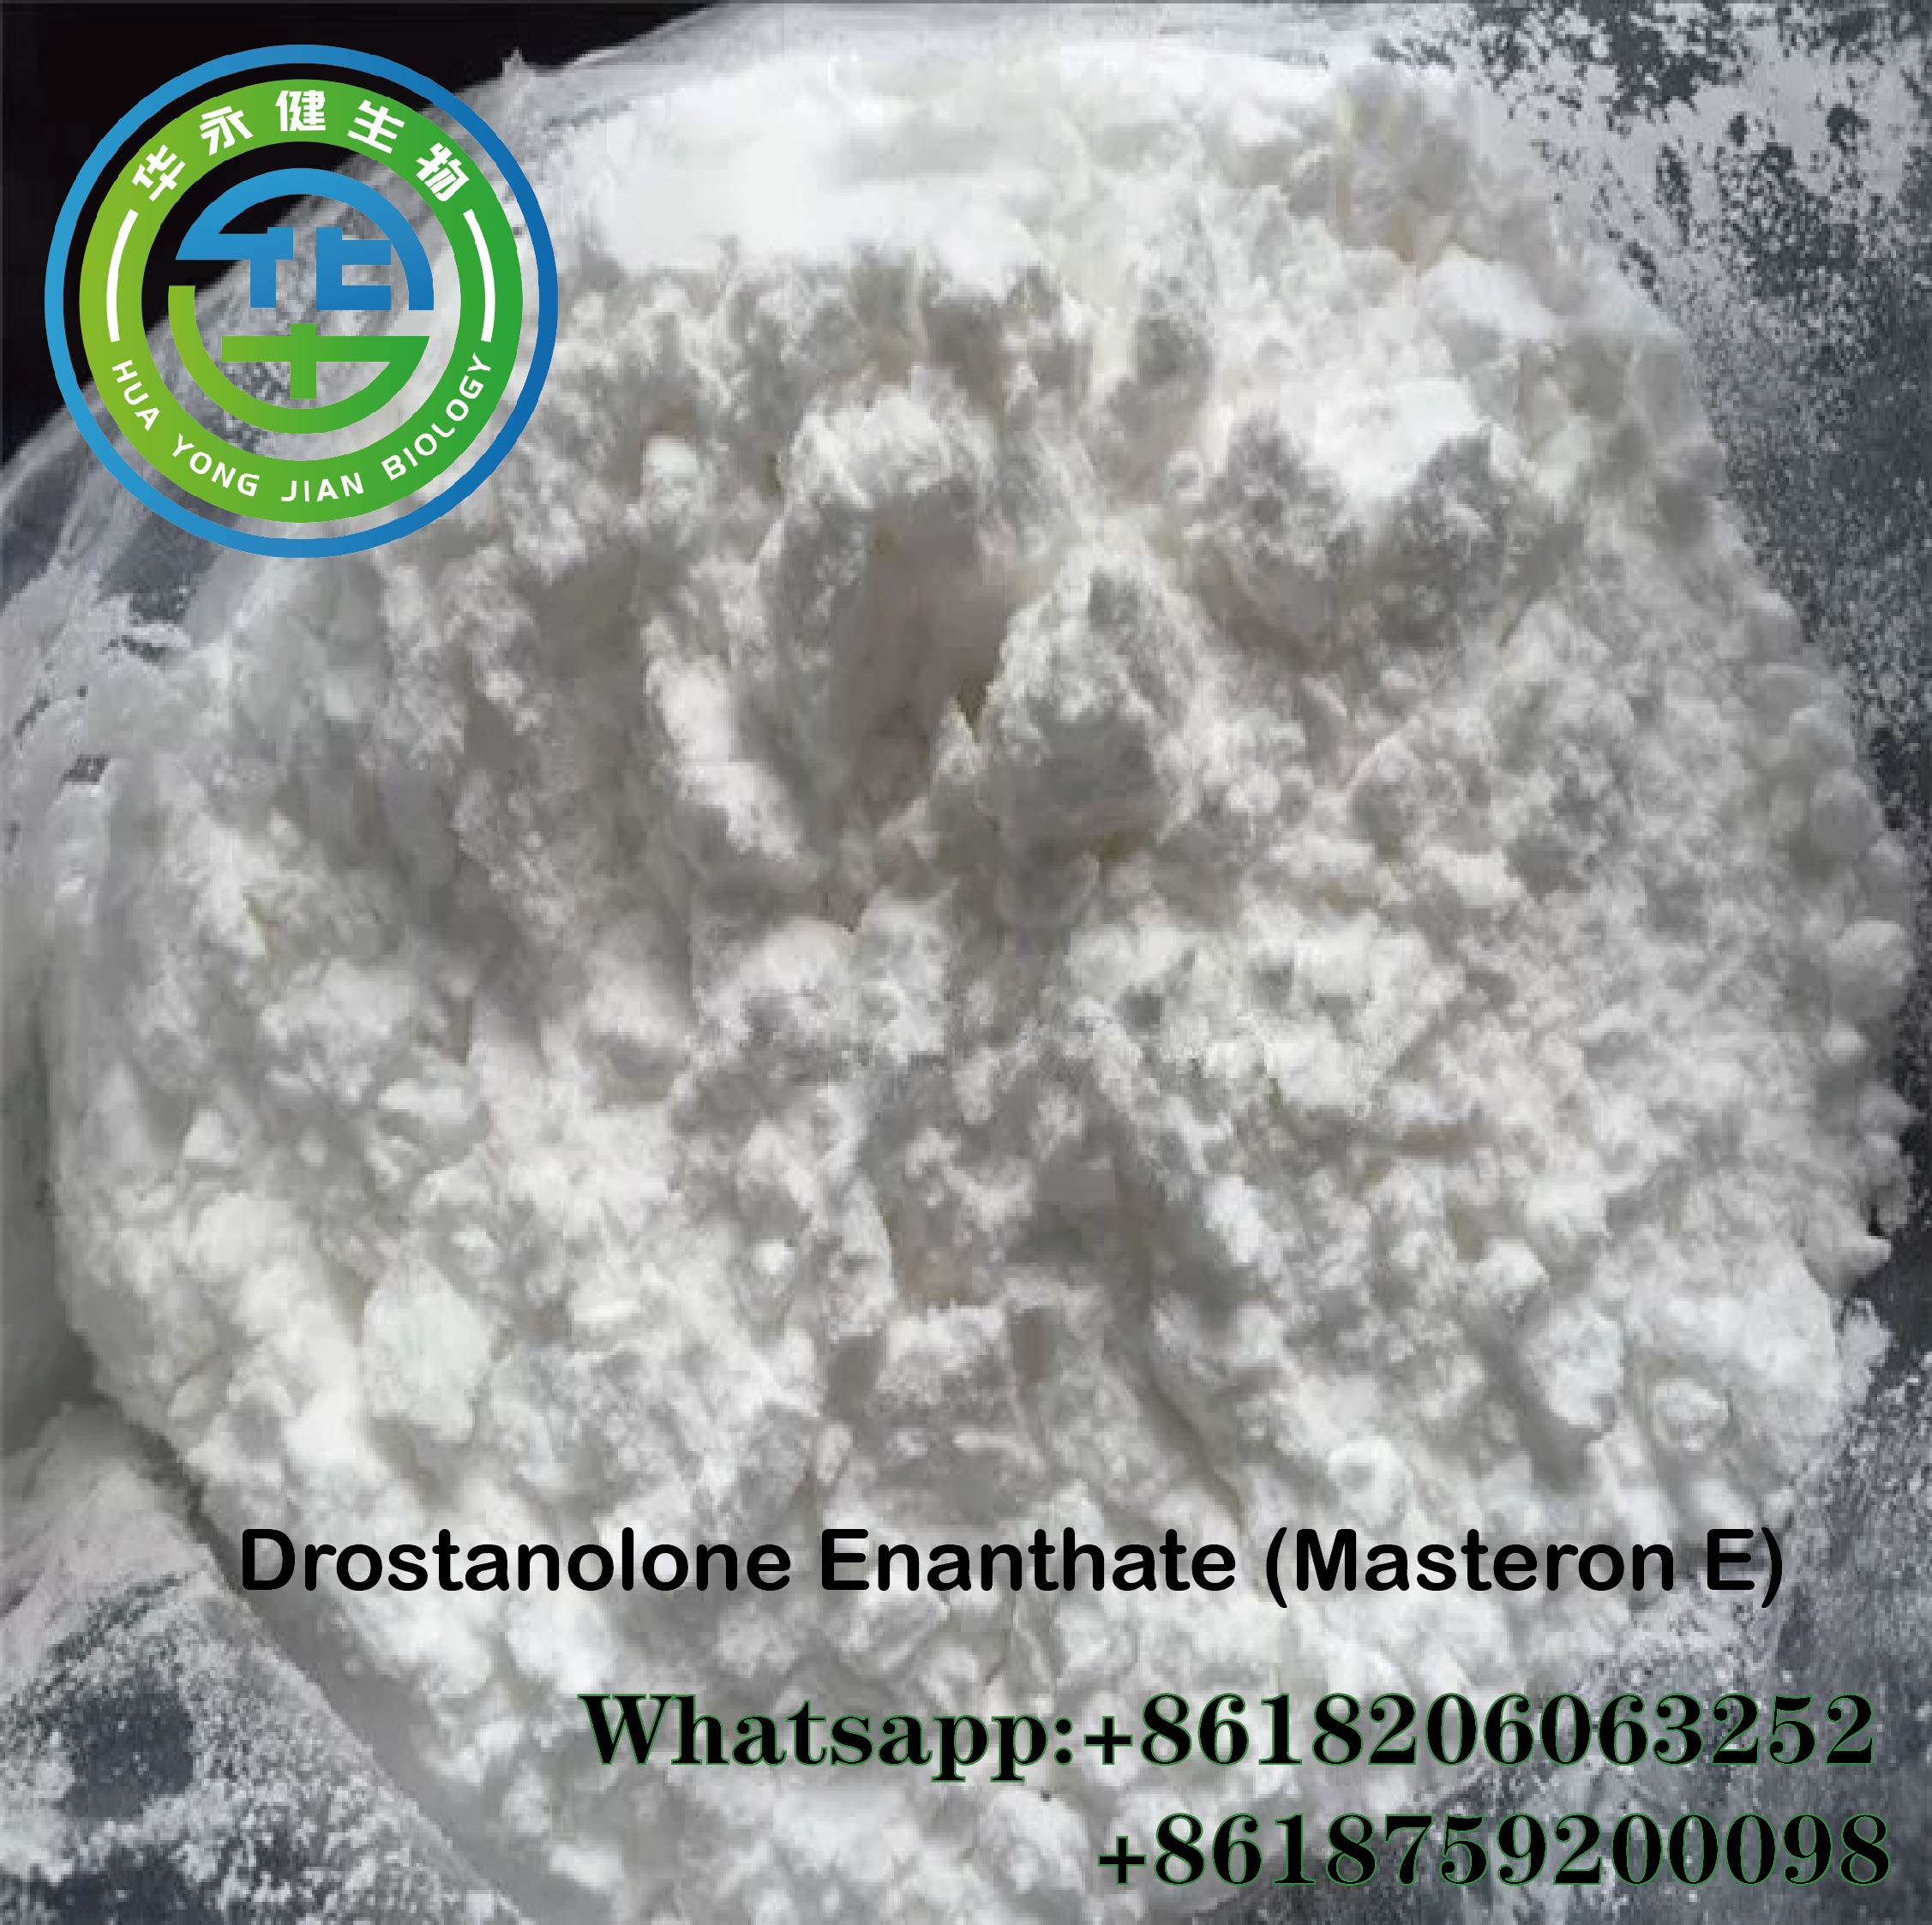 Anabolics Masteron E Raw Steroids Powder Drostanolone Enanthate með Safe Deliver Paypal Accep CasNO.472-61-145 Valin mynd